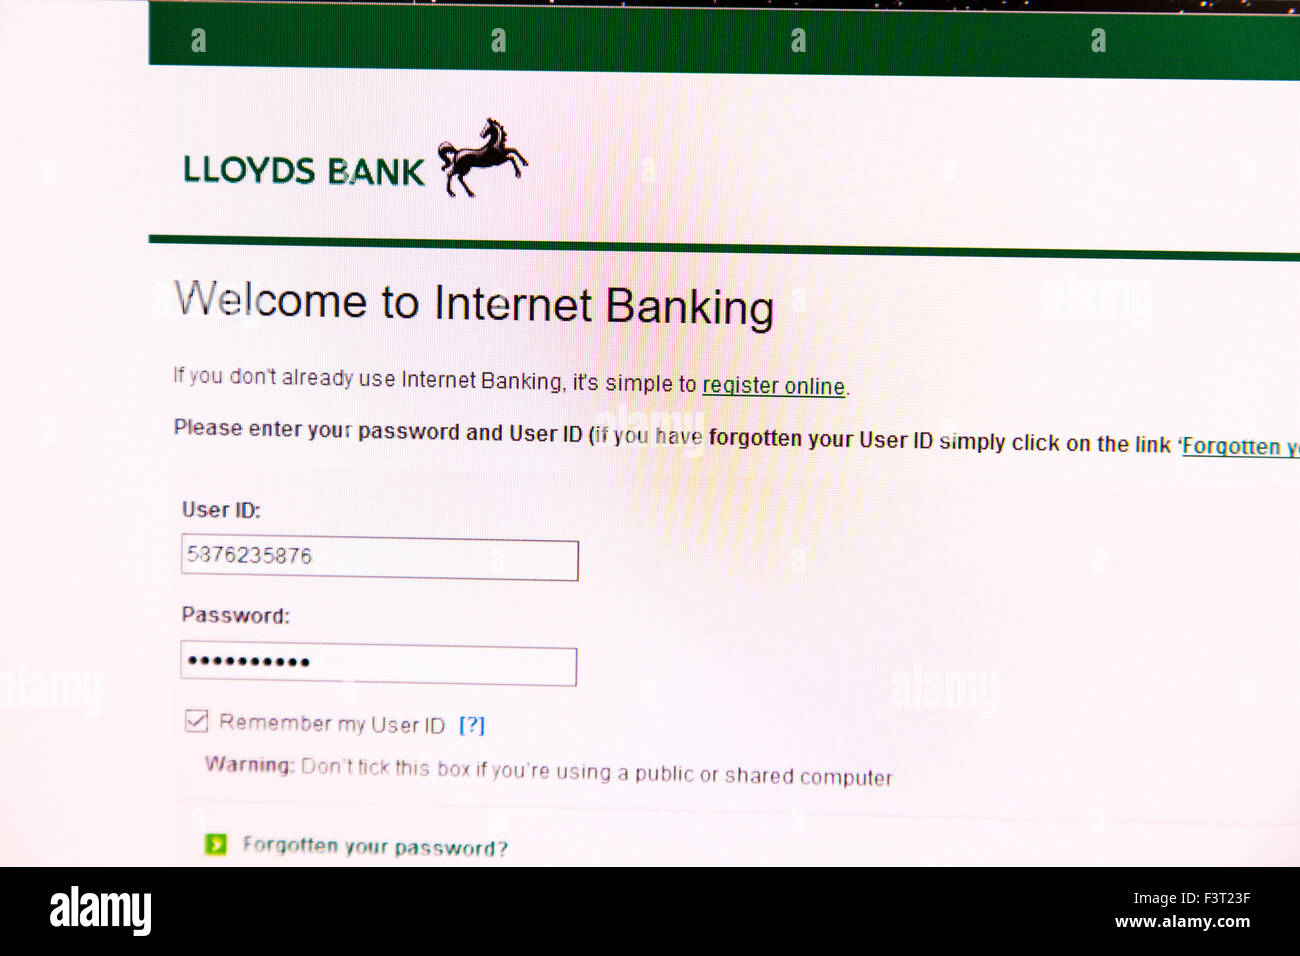 Banca online banking Lloyds security secure user id sito web login homepage online screenshot dello schermo di web site internet net Foto Stock